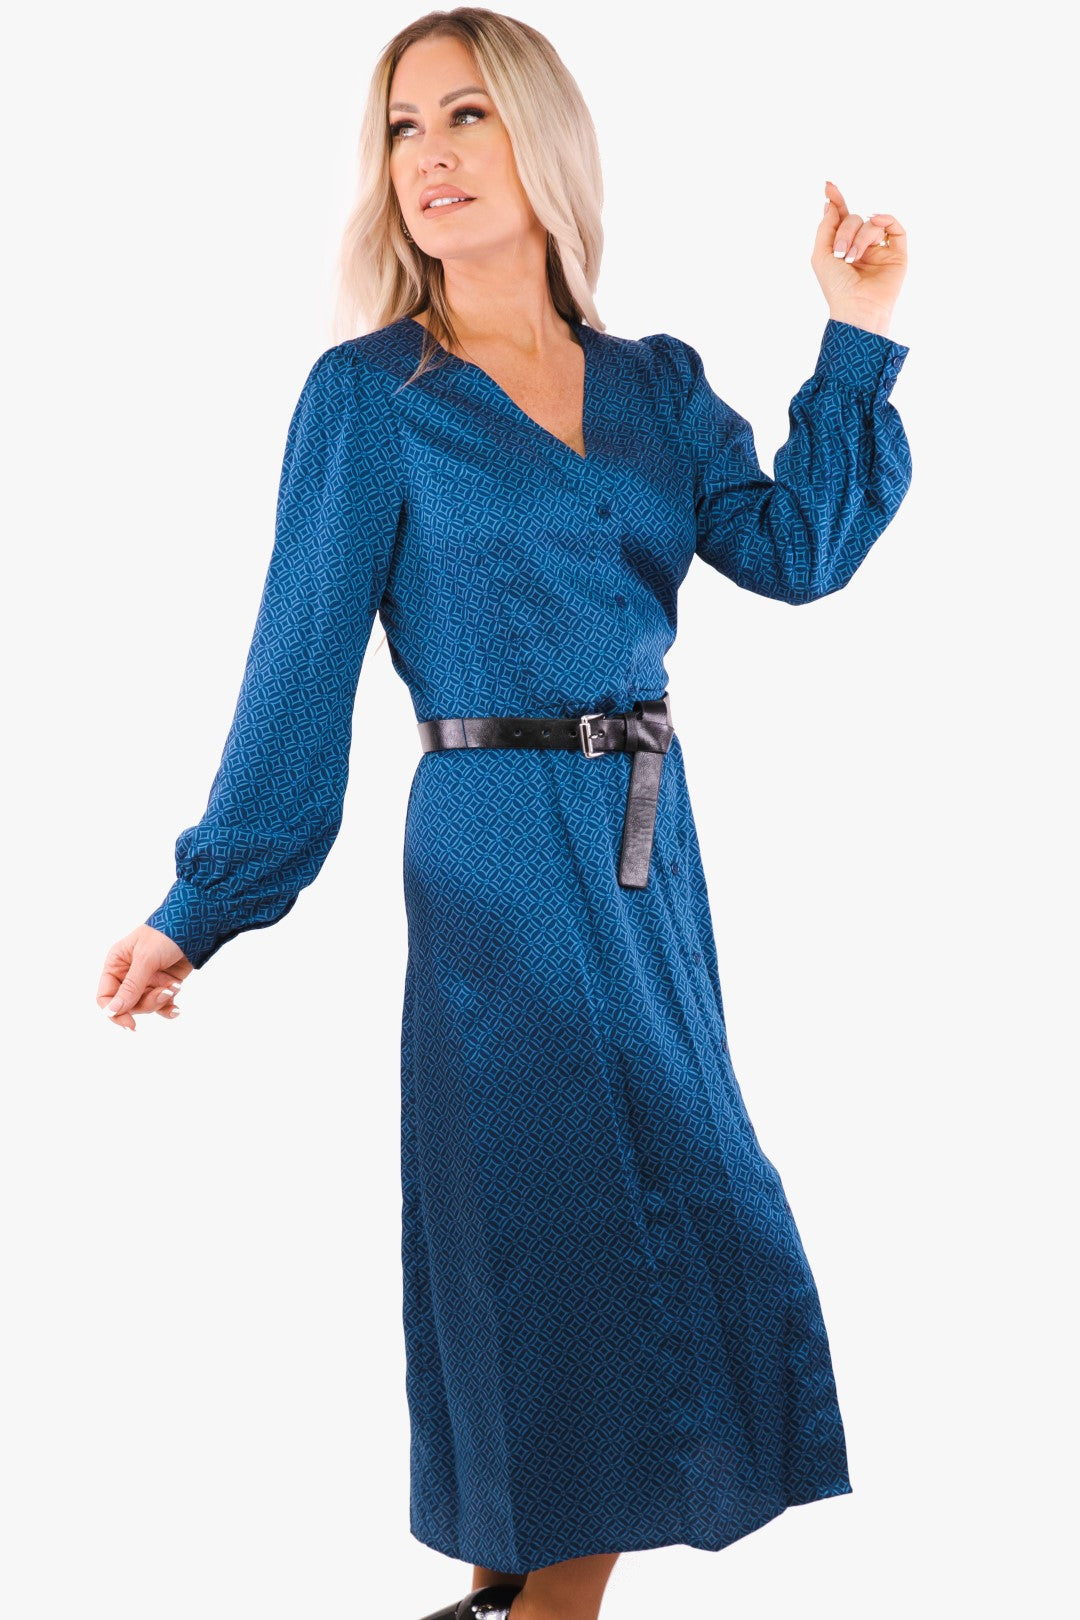 Blue Michael Kors Dress